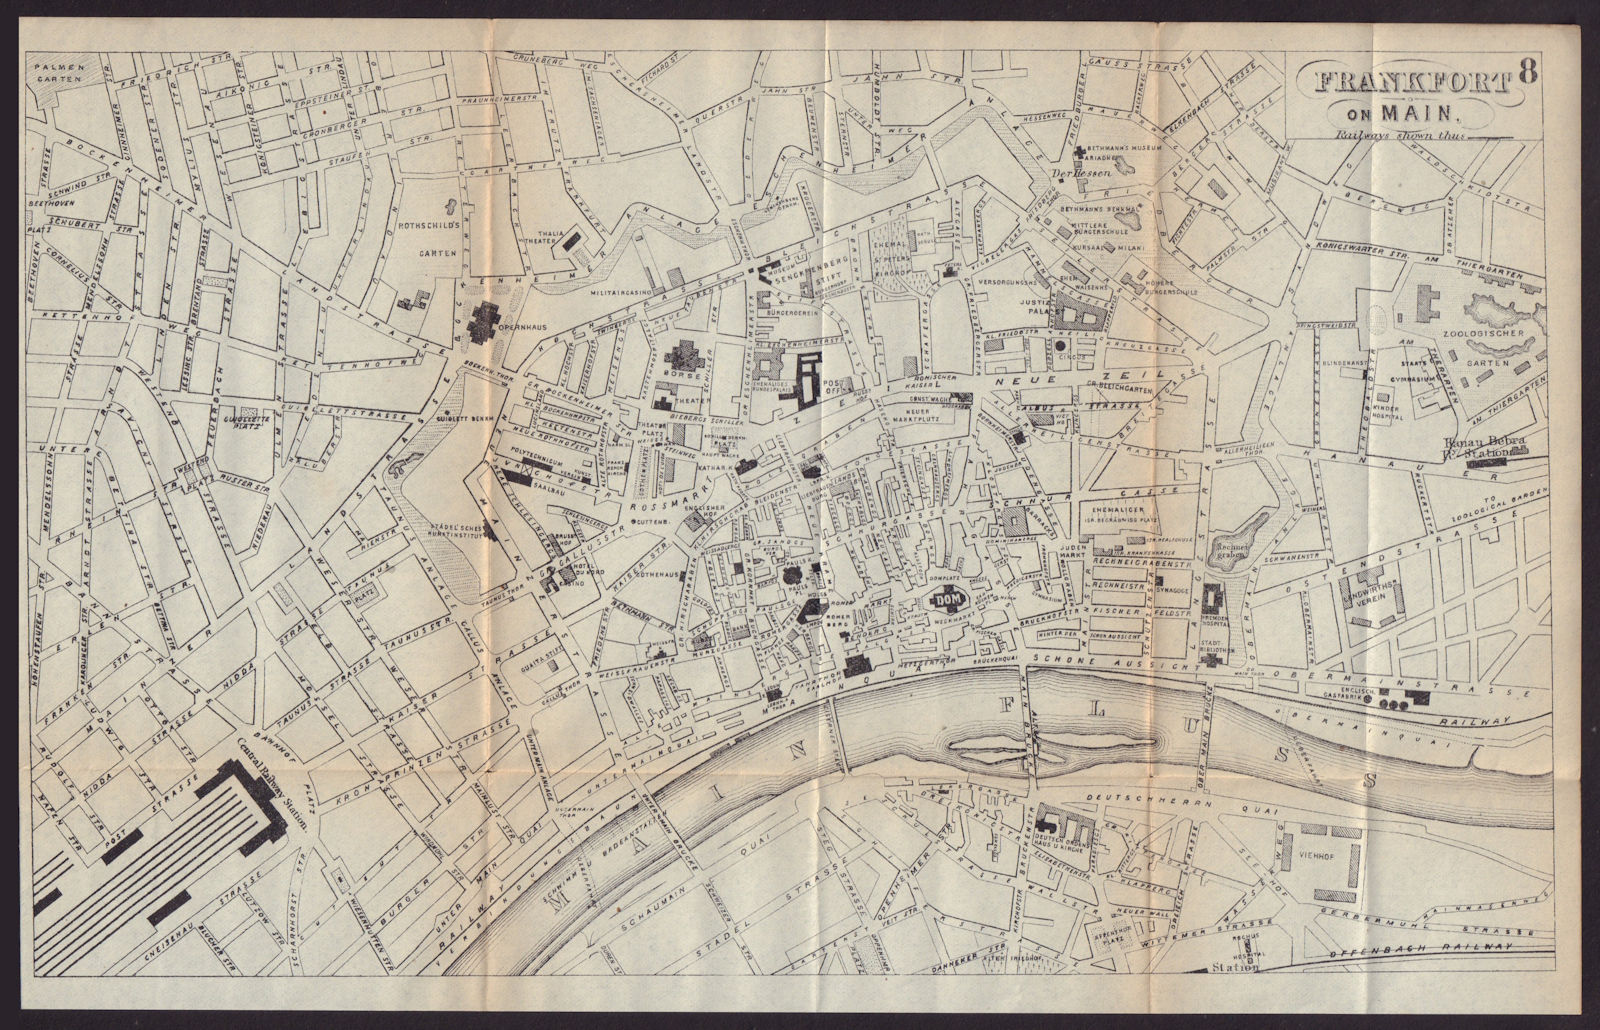 Associate Product FRANKFURT AM MAIN antique town plan city map. Germany. BRADSHAW 1893 old